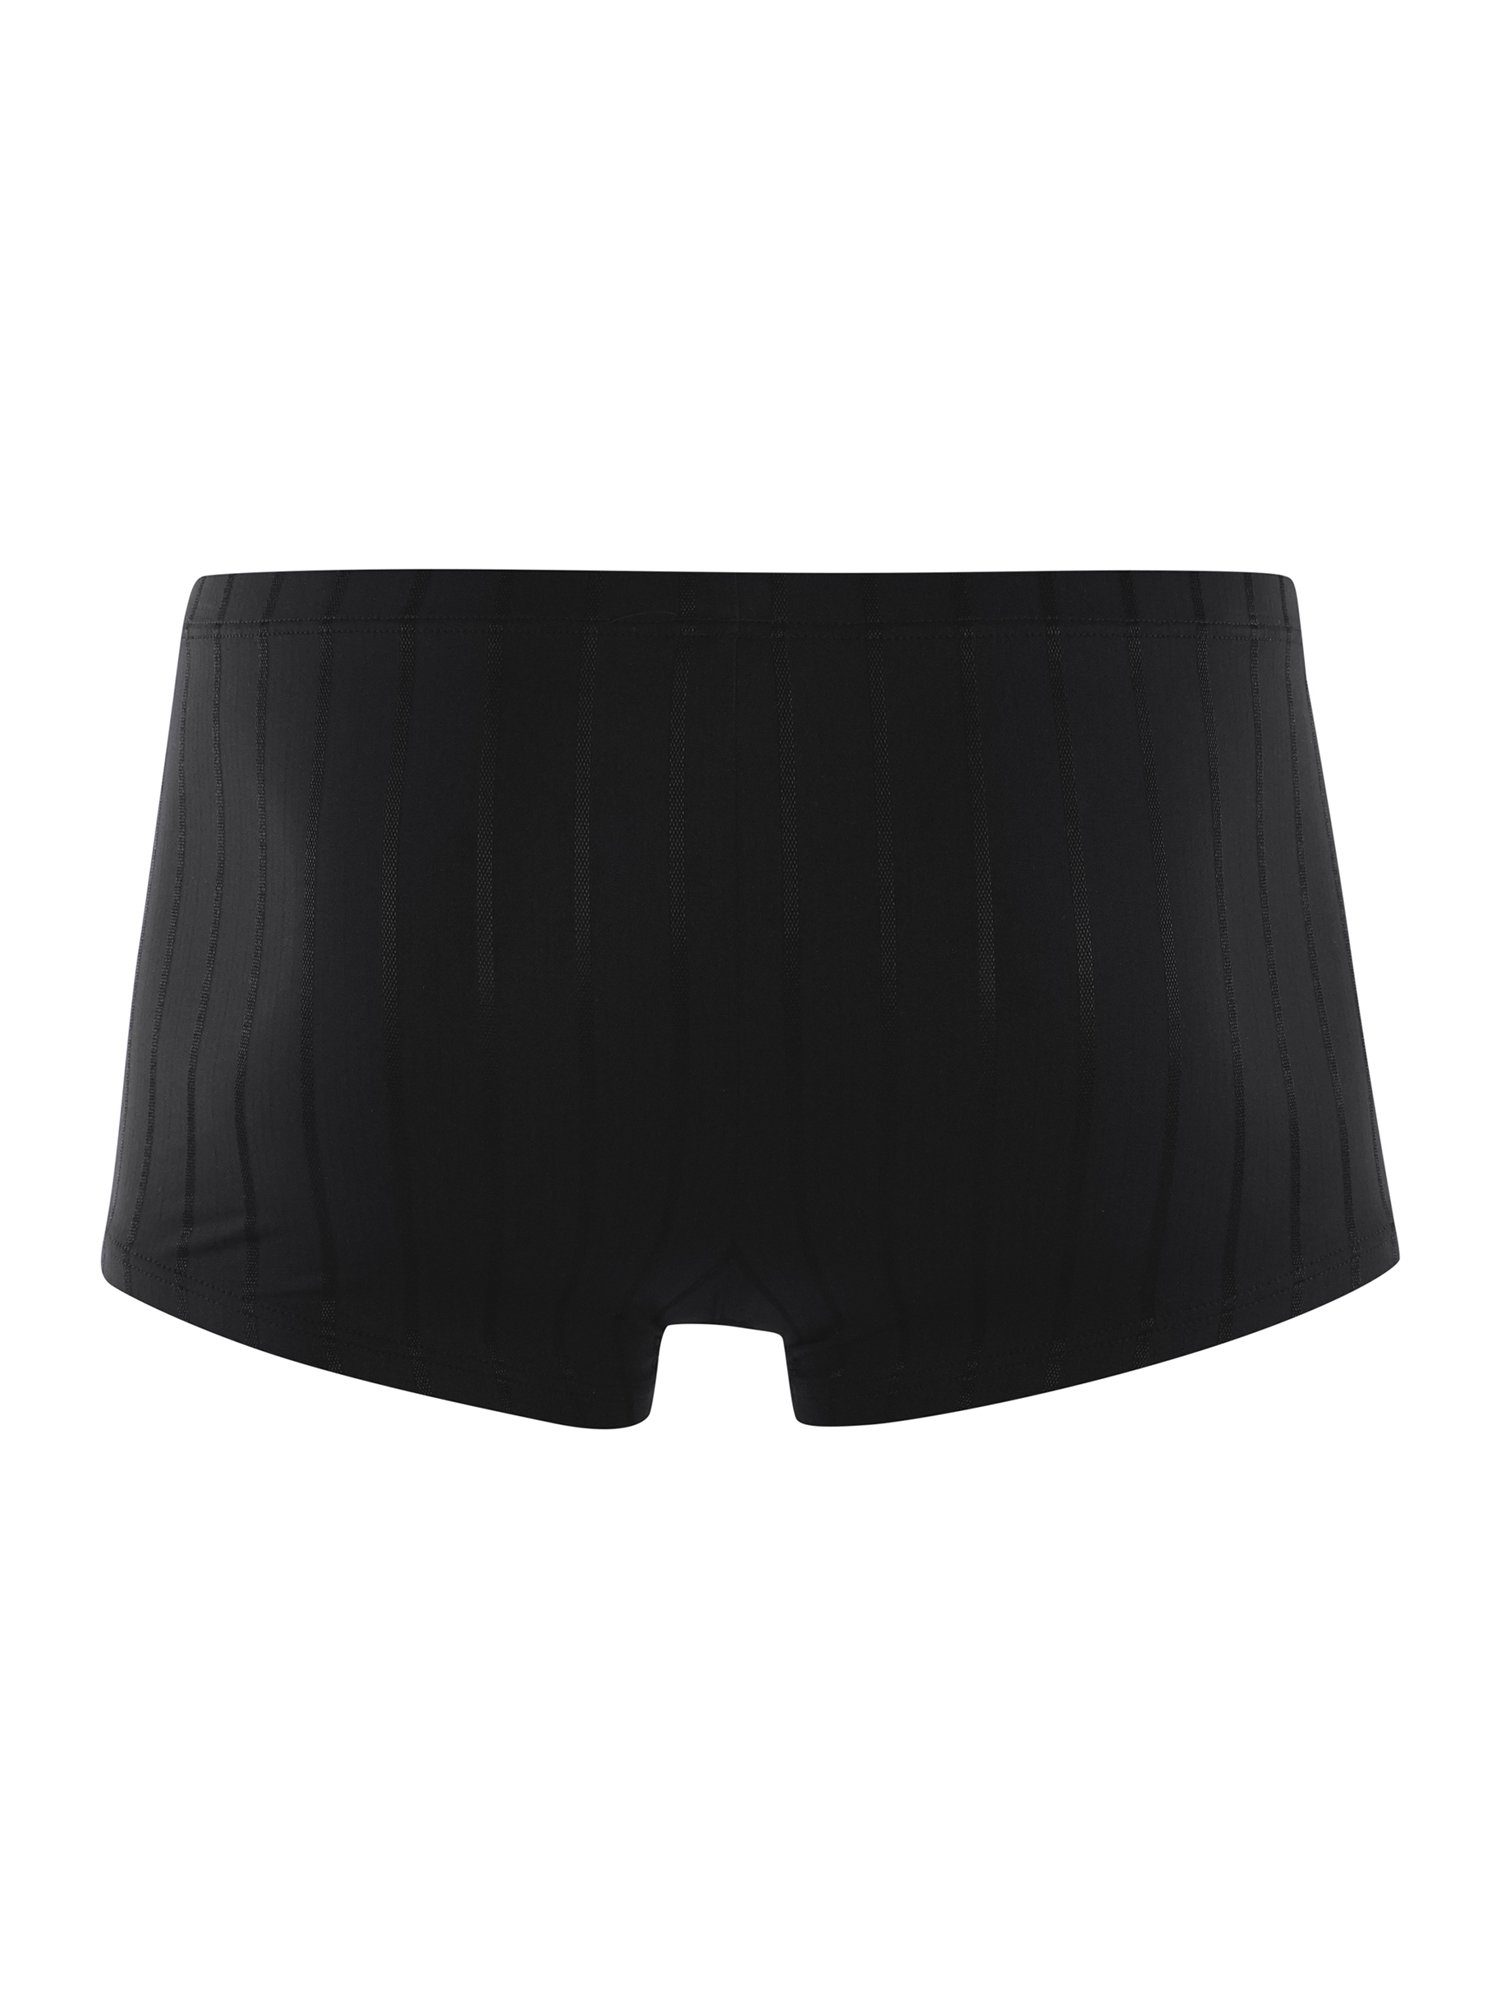 Retro black Minipants Benz Retro-Boxer Retro-shorts unterhose RED2358 Pants Olaf